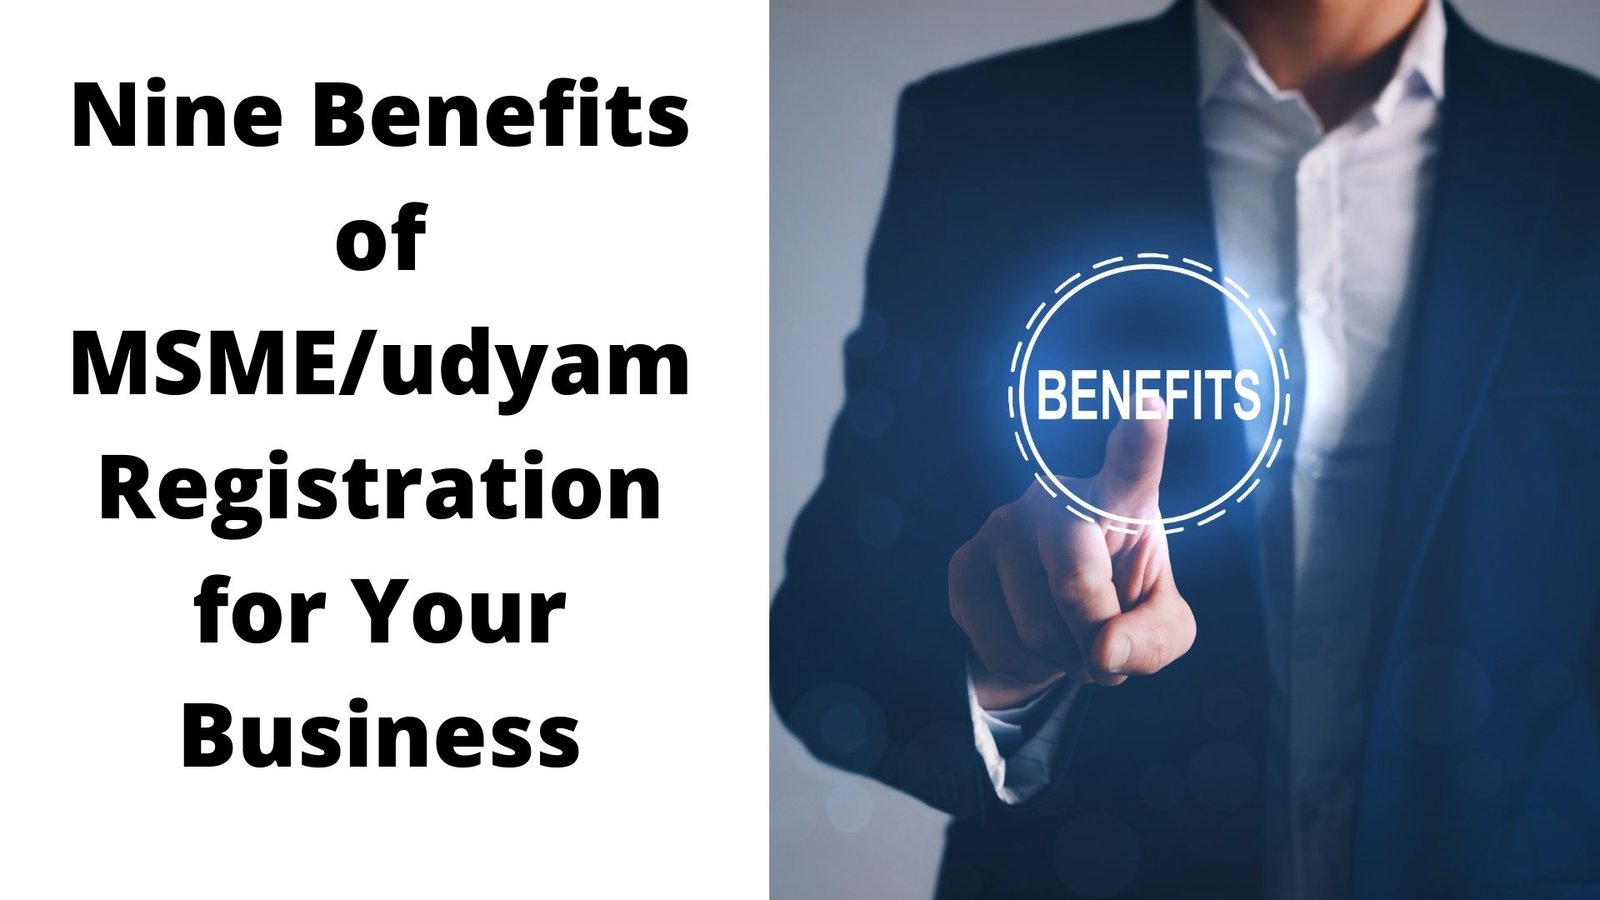 Nine Benefits of MSMEudyam Registration for Your Business